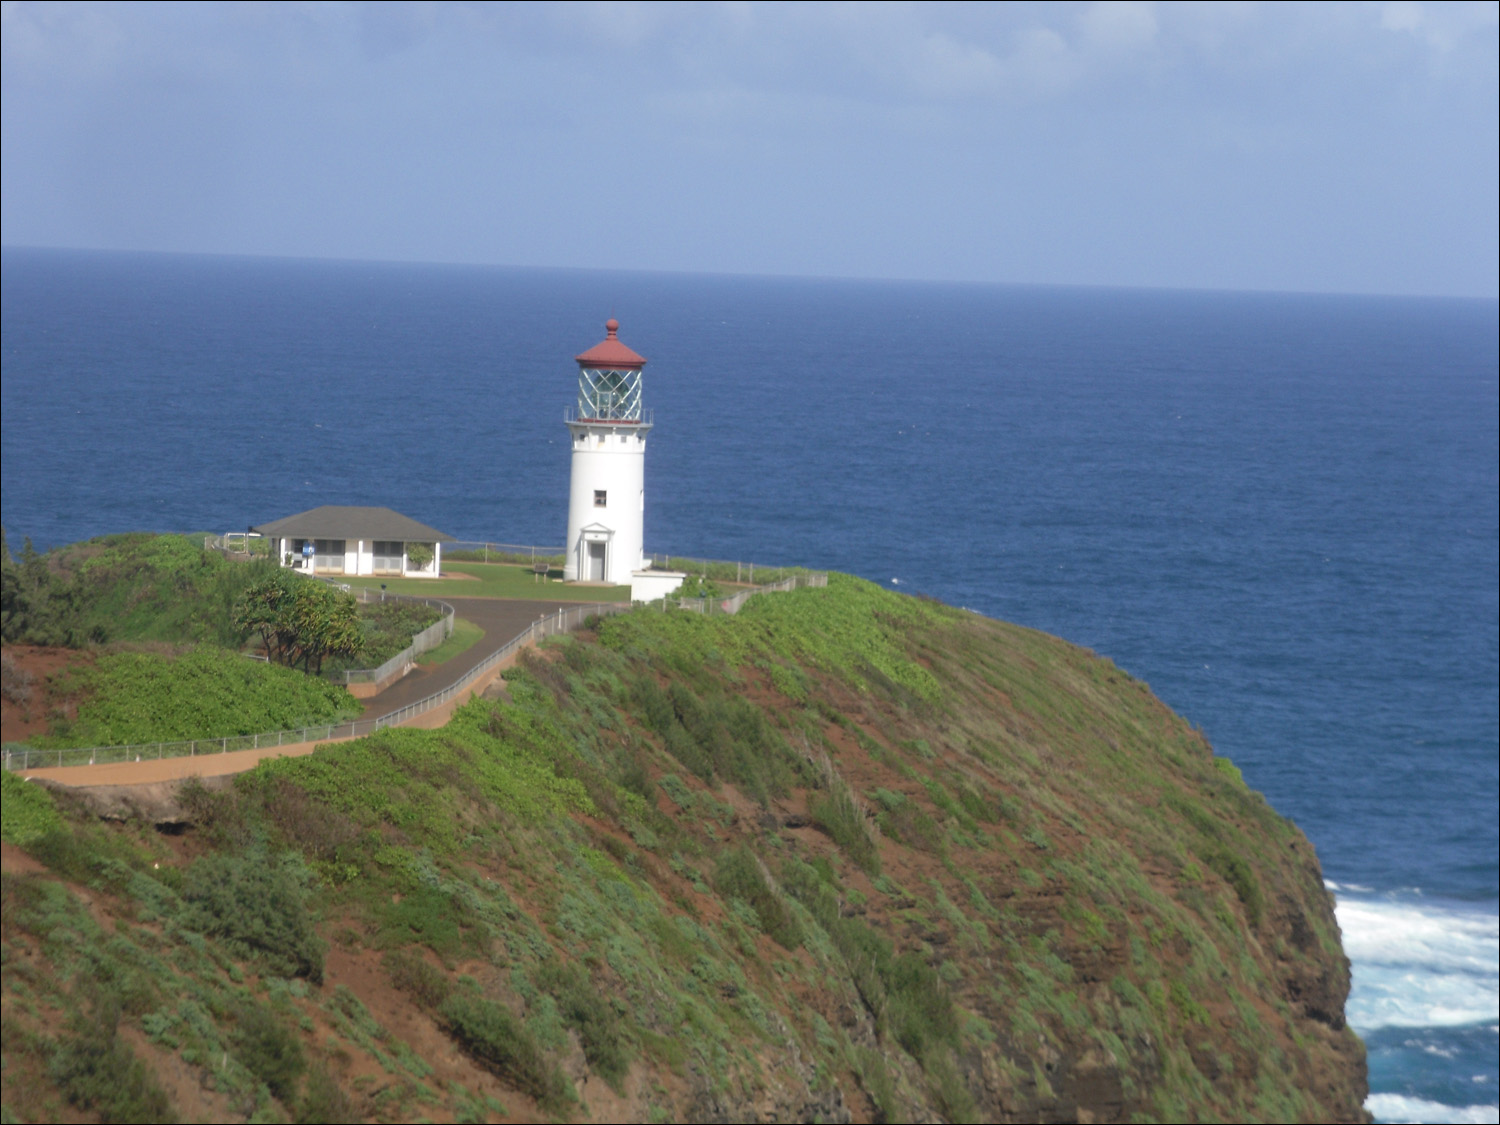 Kilauea lighthouse